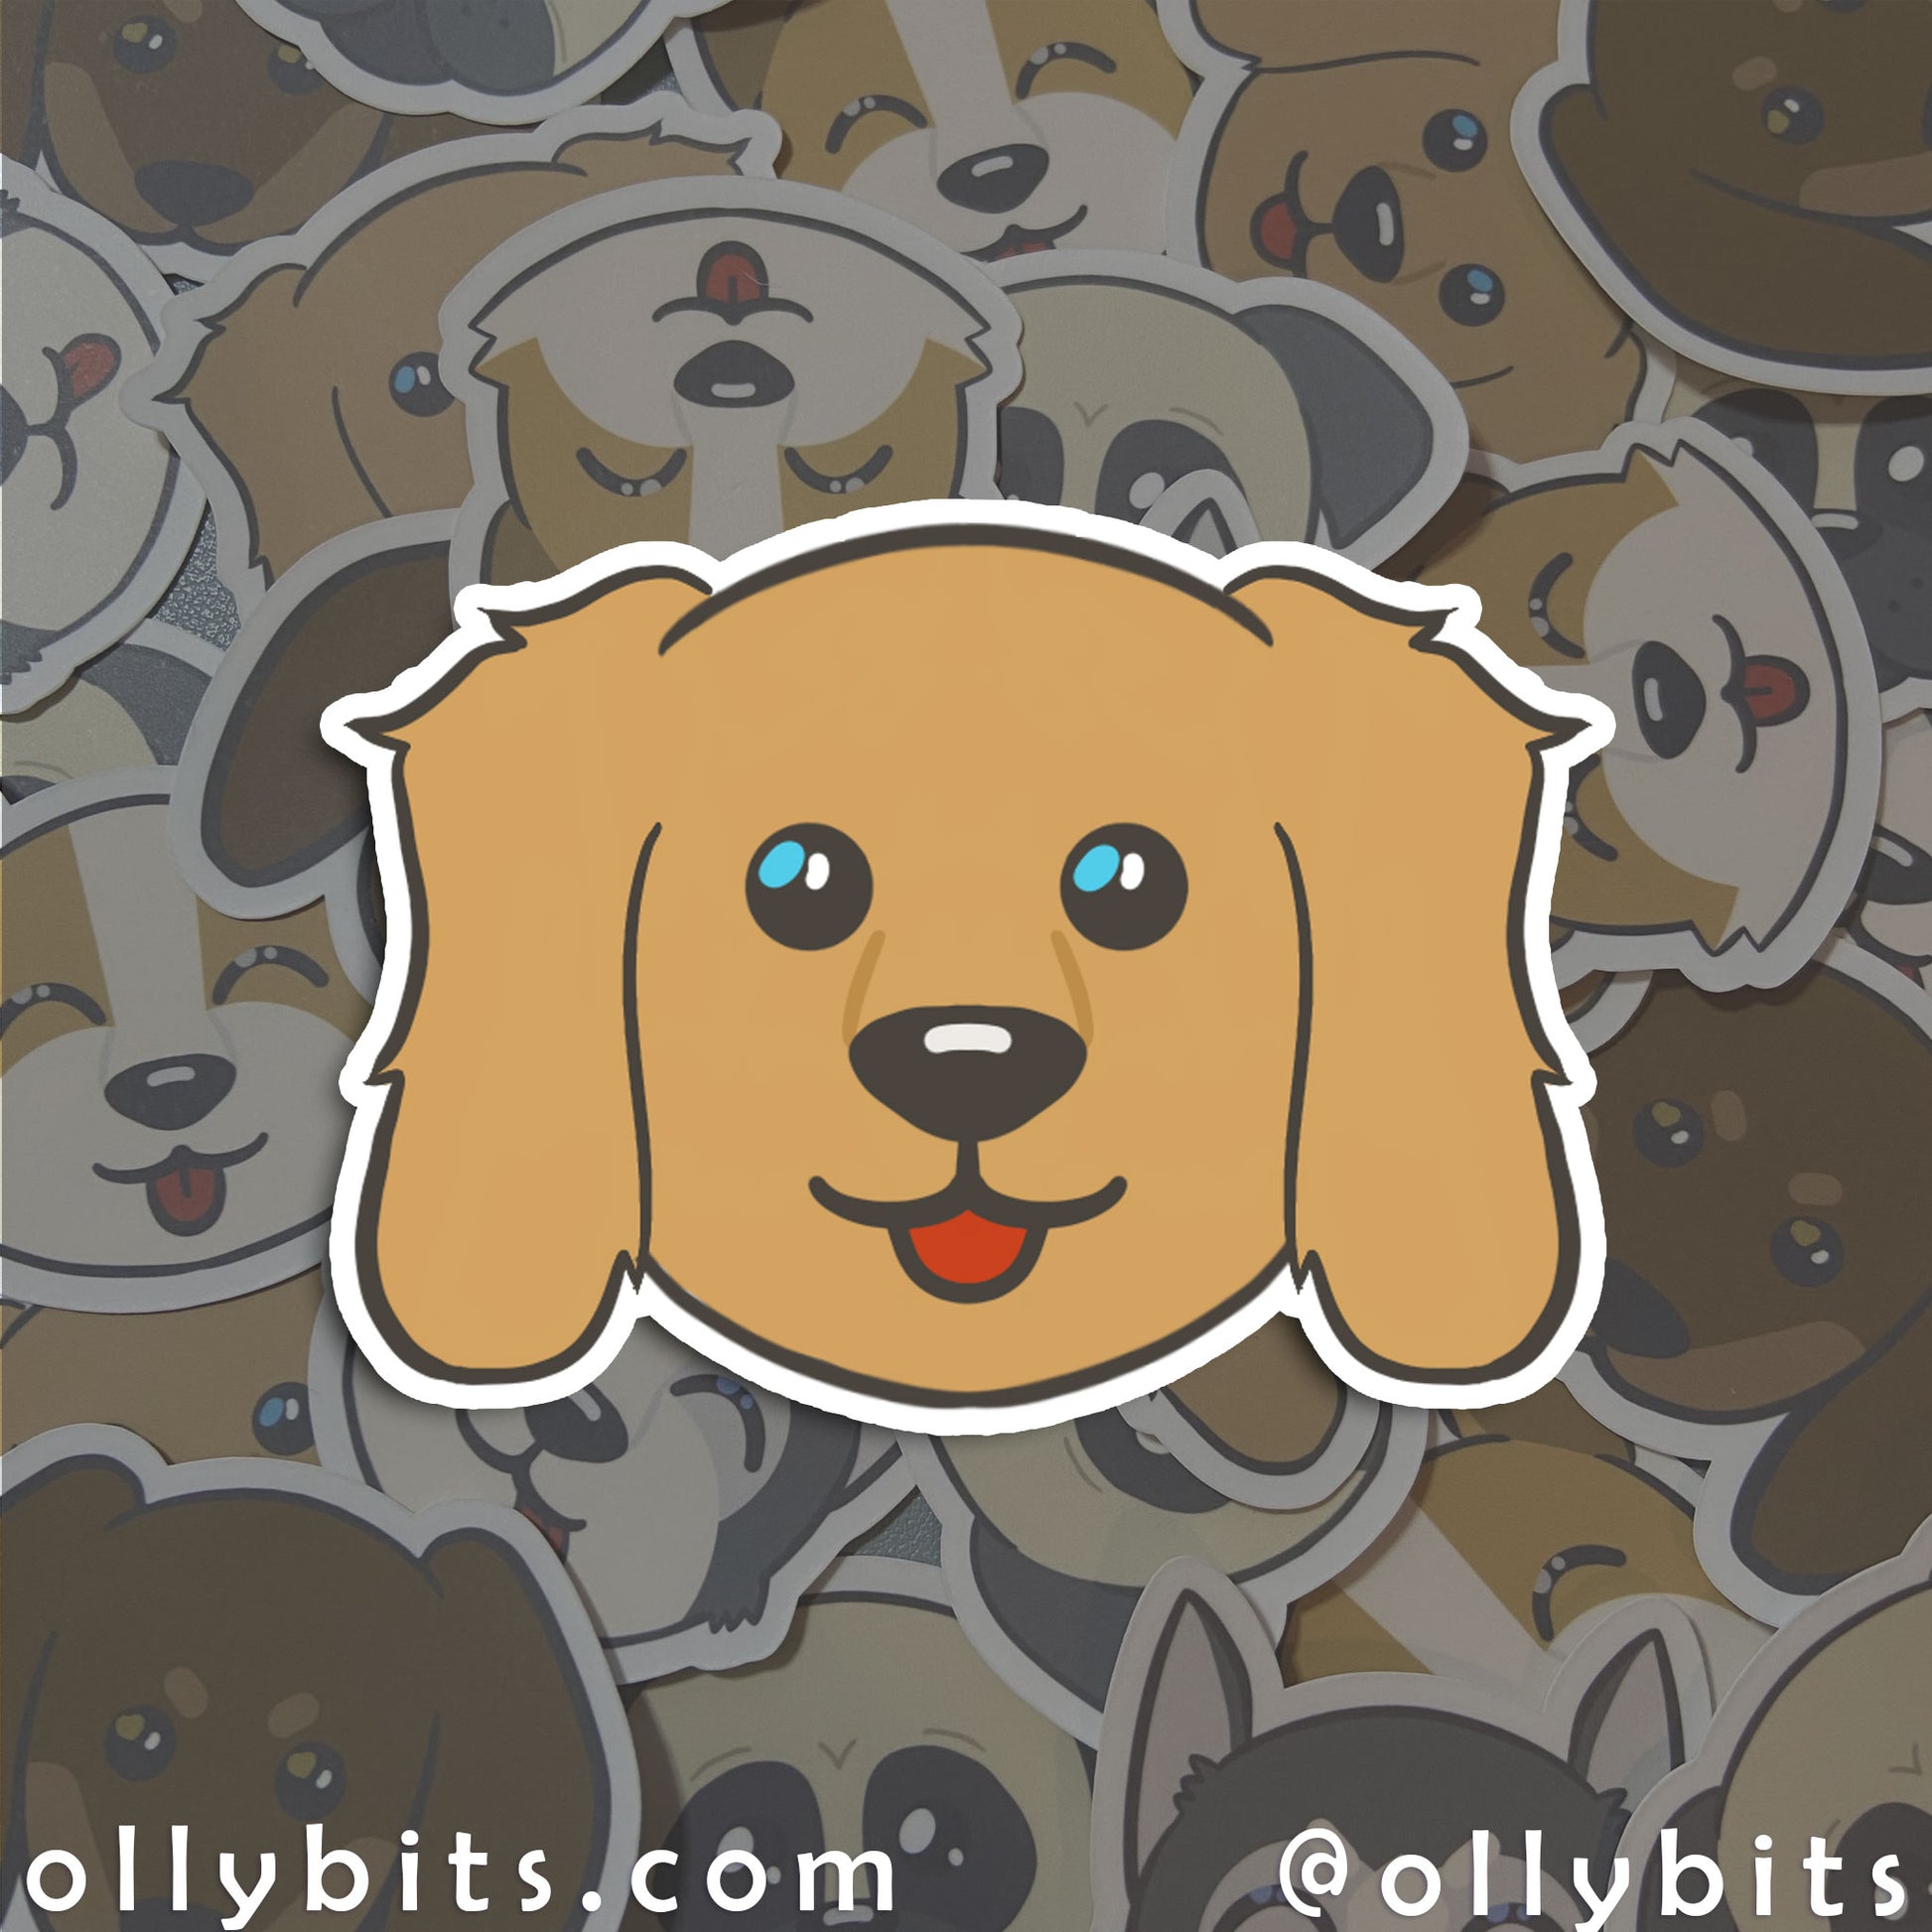 Golden Retriever Doggo Vinyl Sticker (2") Ollybits Pixel Art